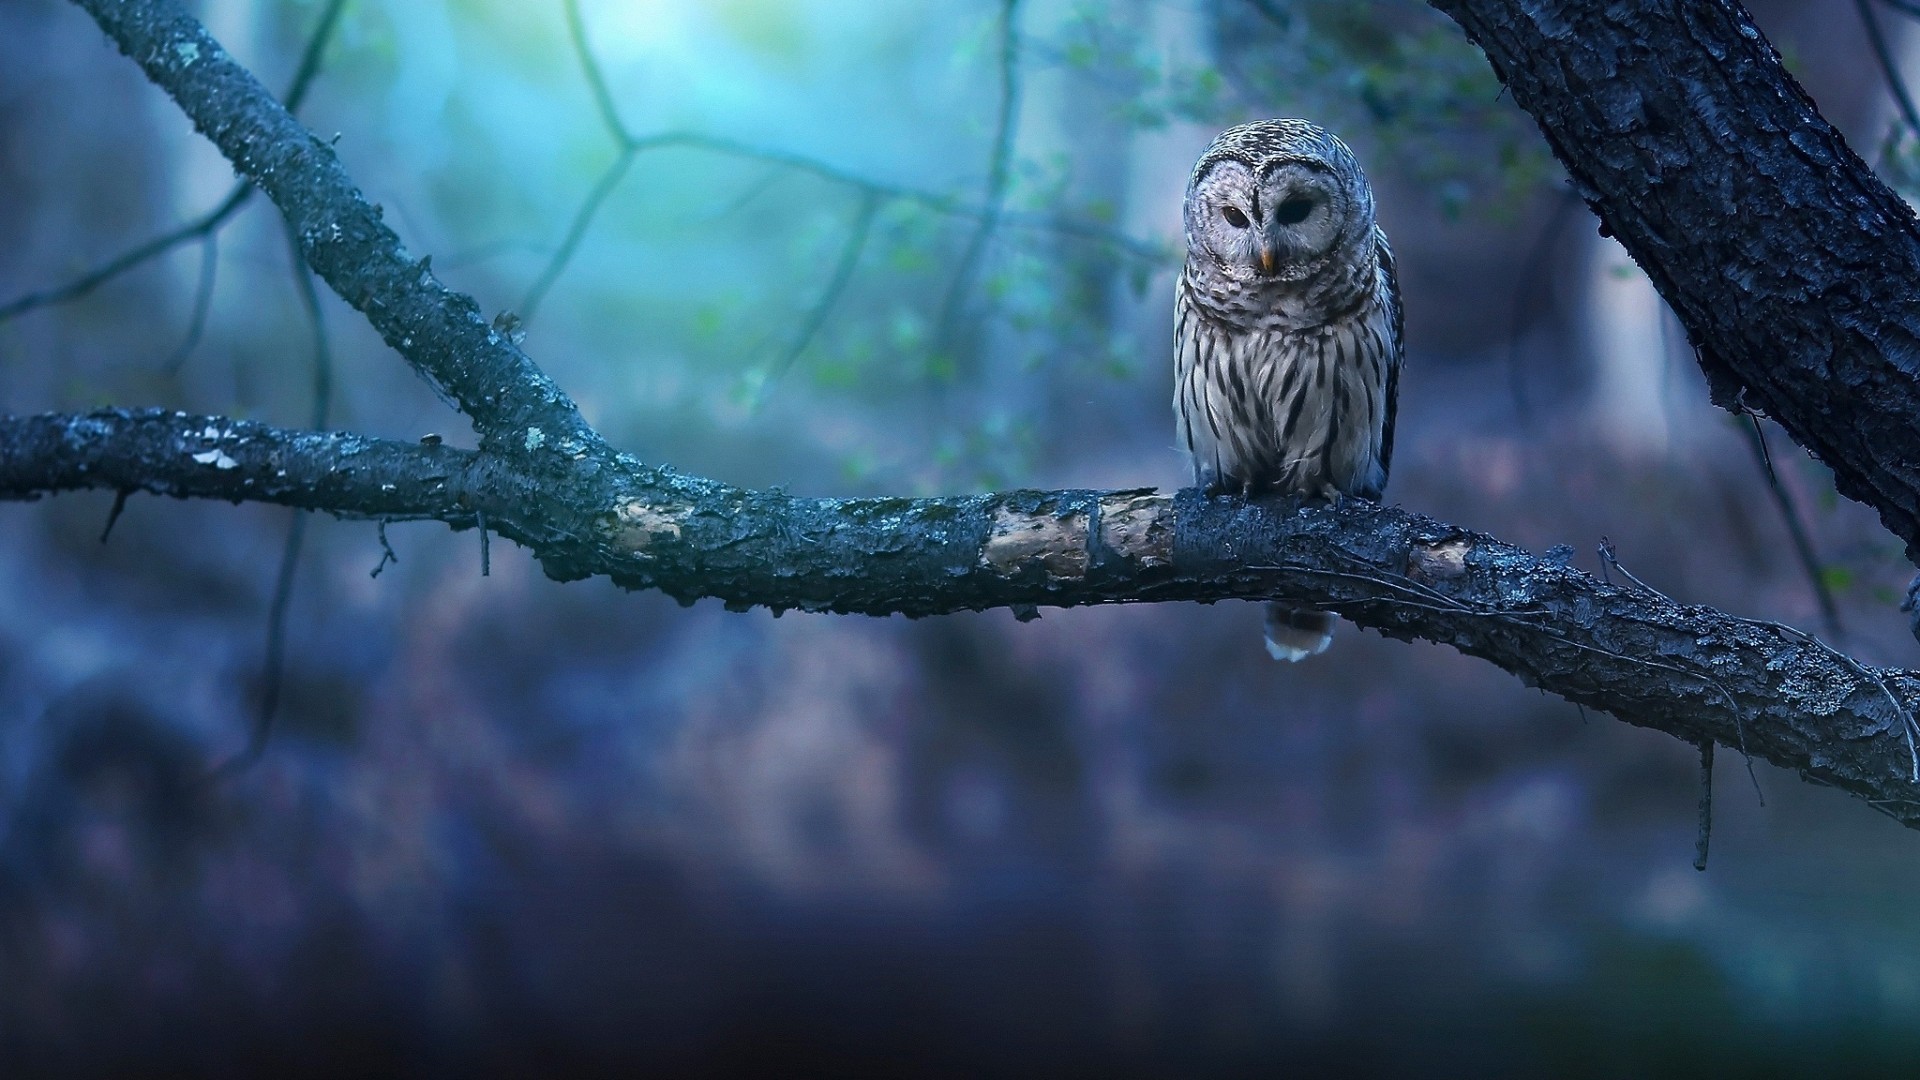 Owl At Tree Hd Wallpaper Iphone 7 Plus / Iphone 8 Plus - Hd Wallpaper